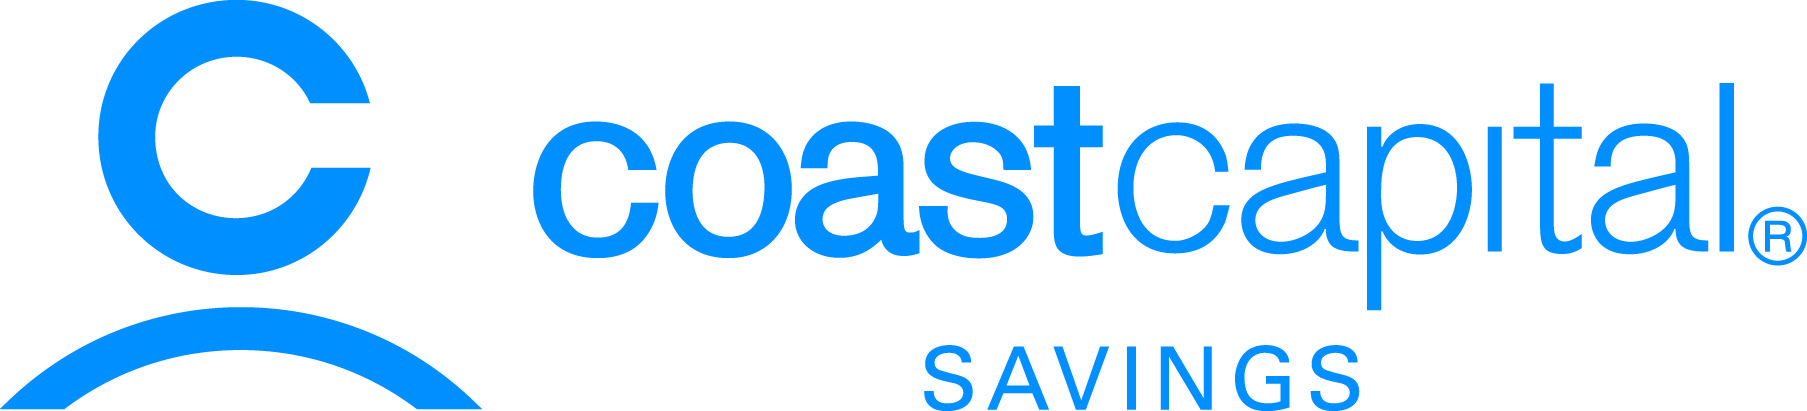 Coast_Savings_Horz_300_hi-res